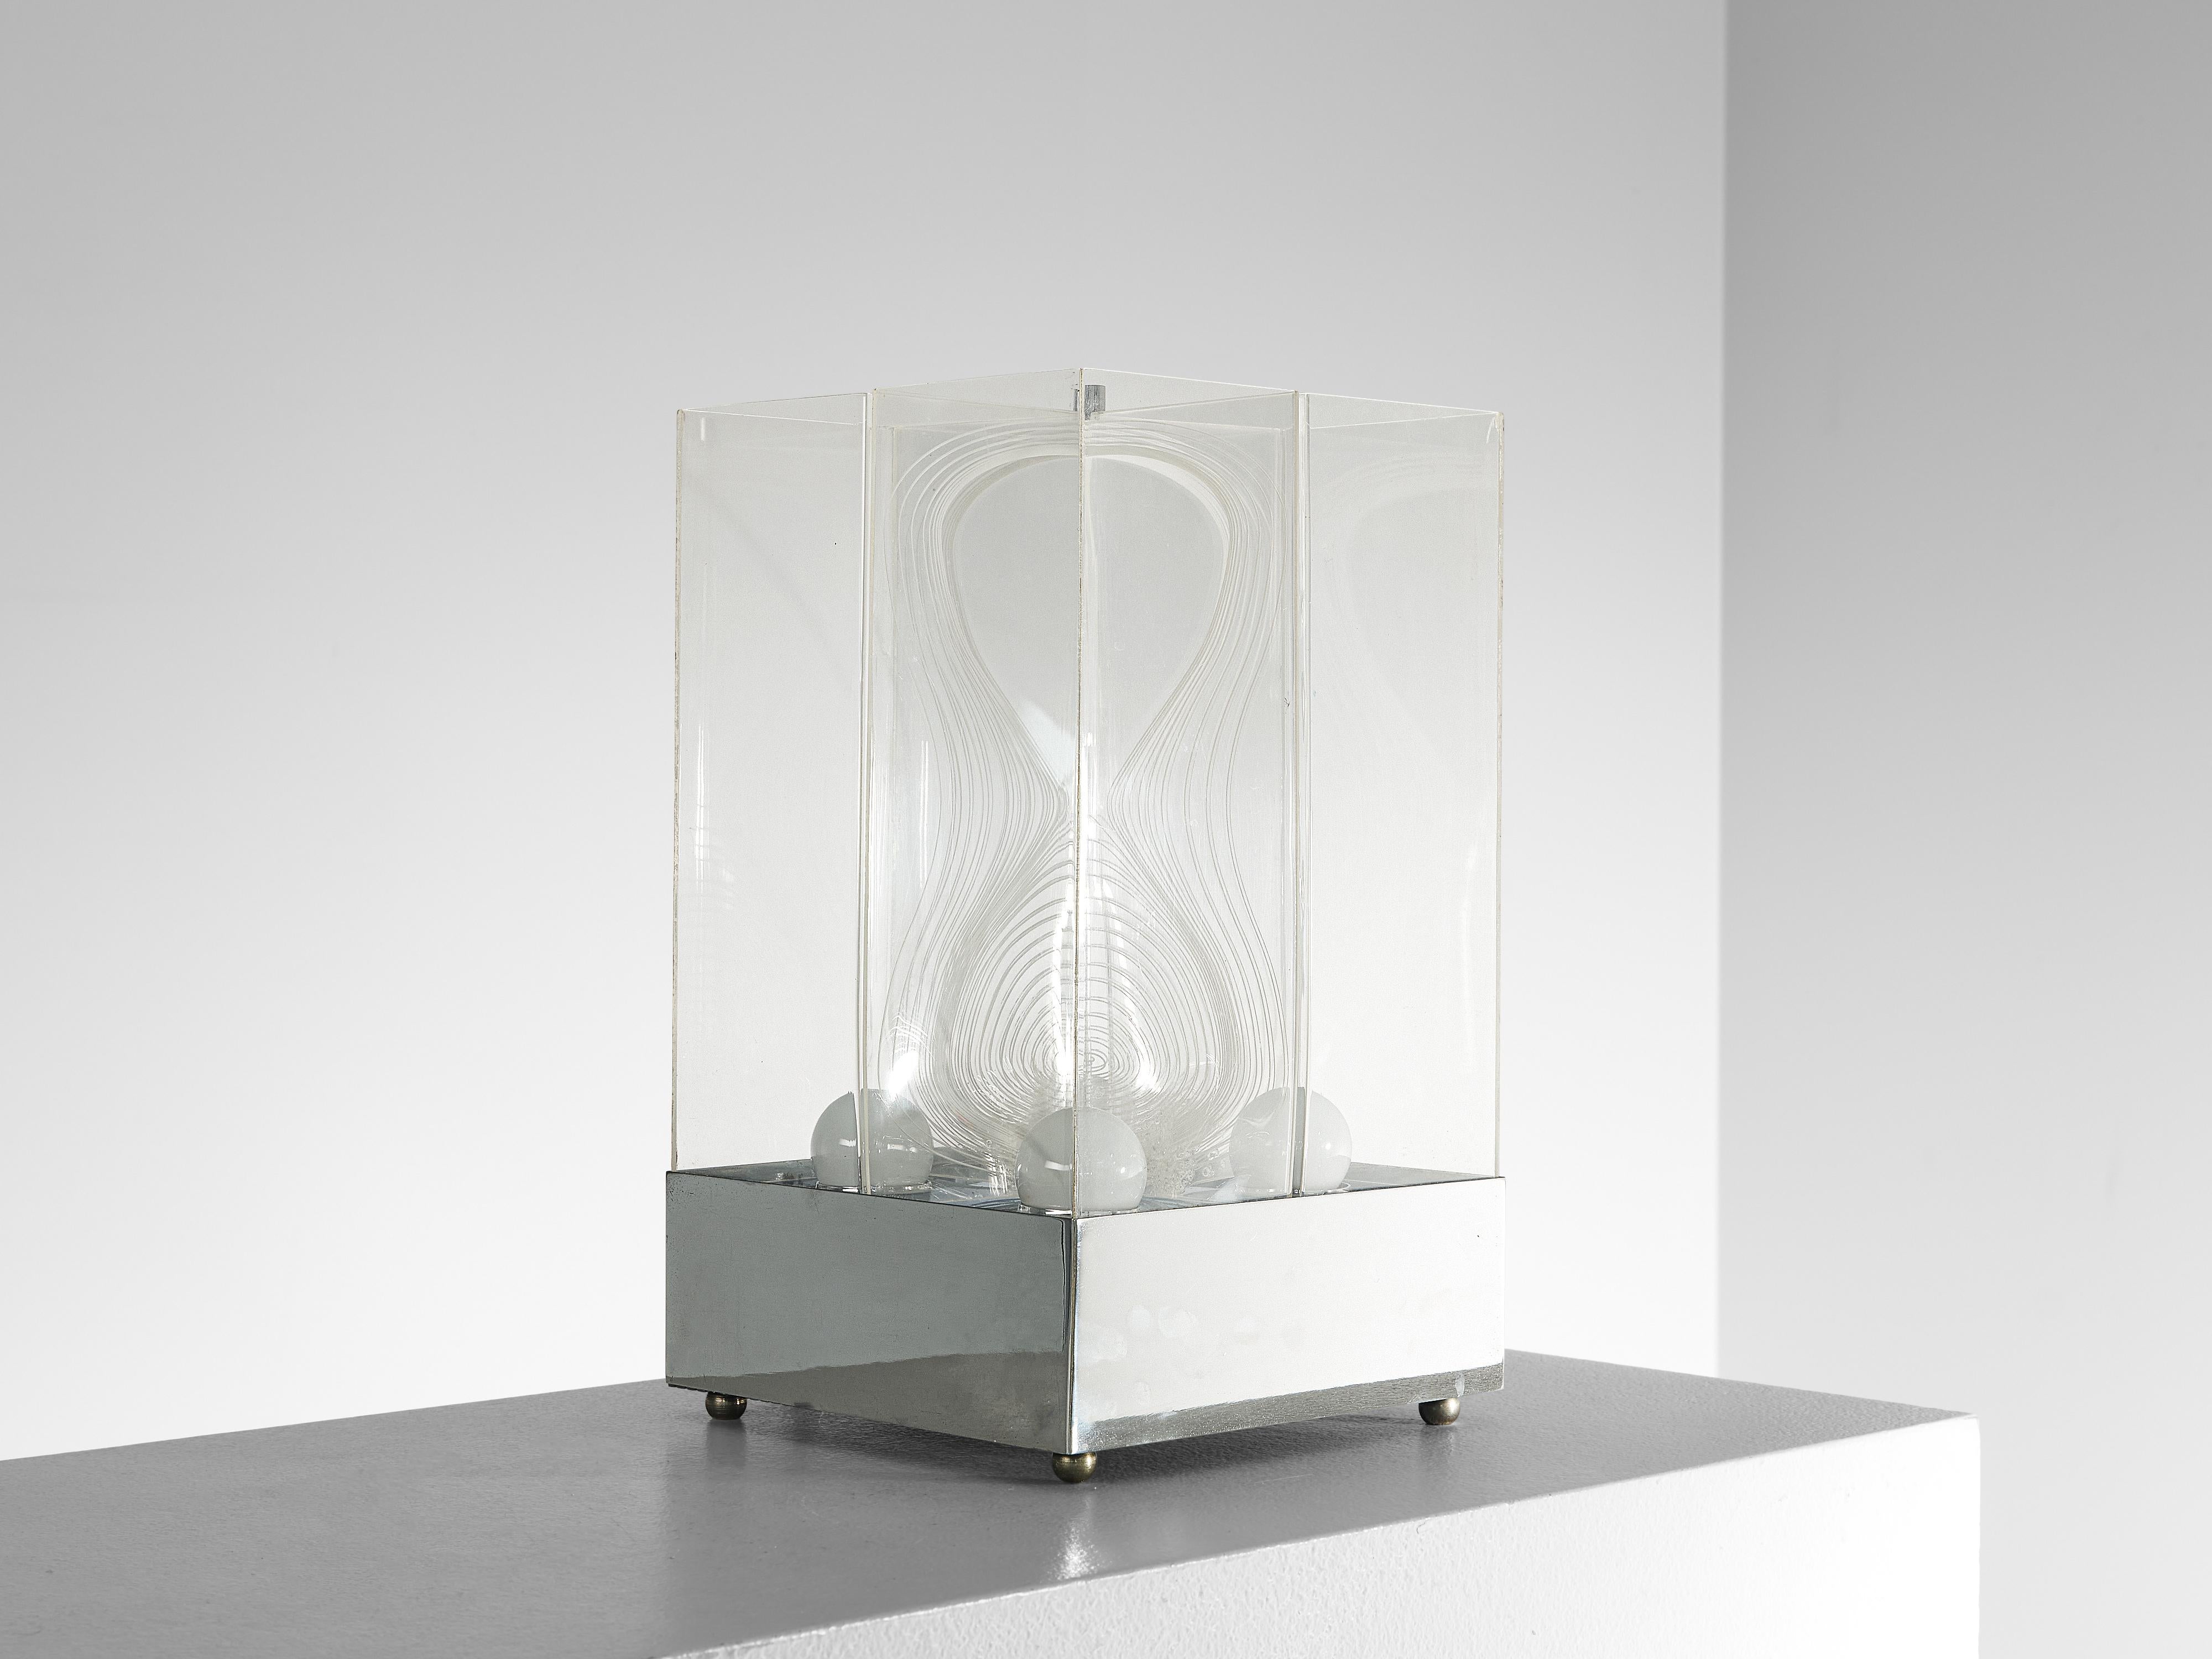 Studio Salvatori for Nucleo Sormani Rare Prototype 'Model 4 ' Table Lamp  1